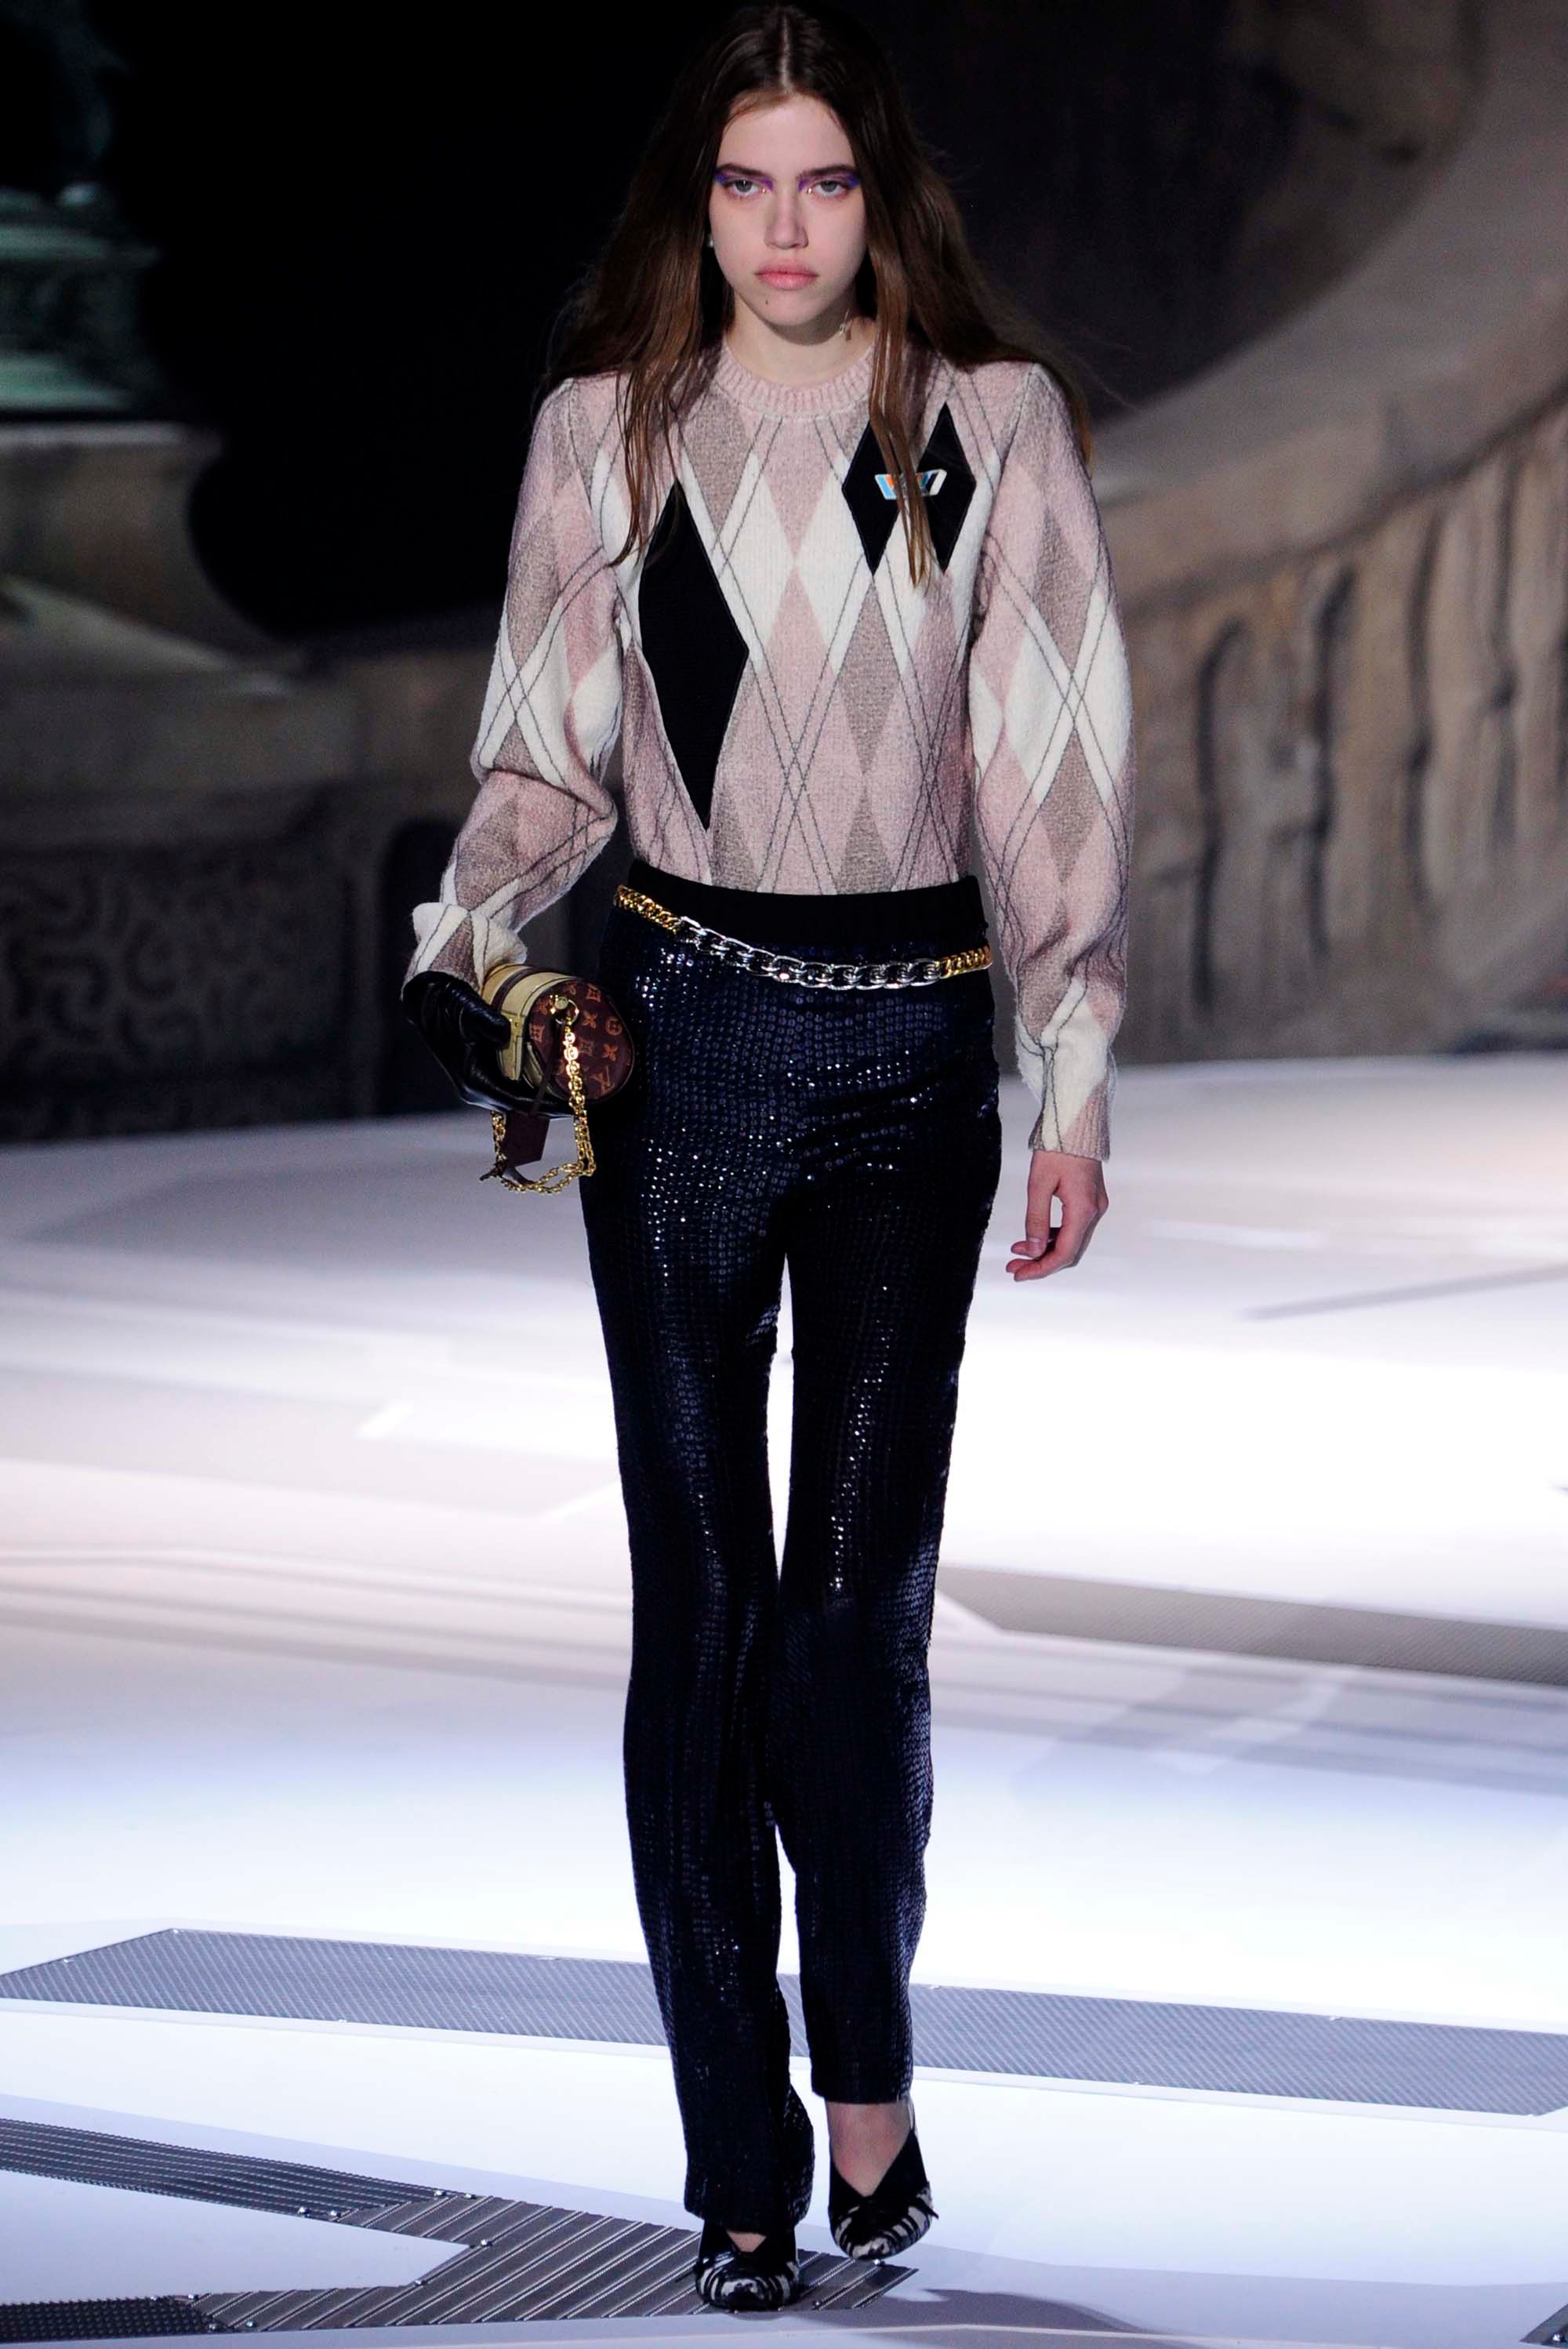 Masha Skokova walks on the runway during the Louis Vuitton Resort